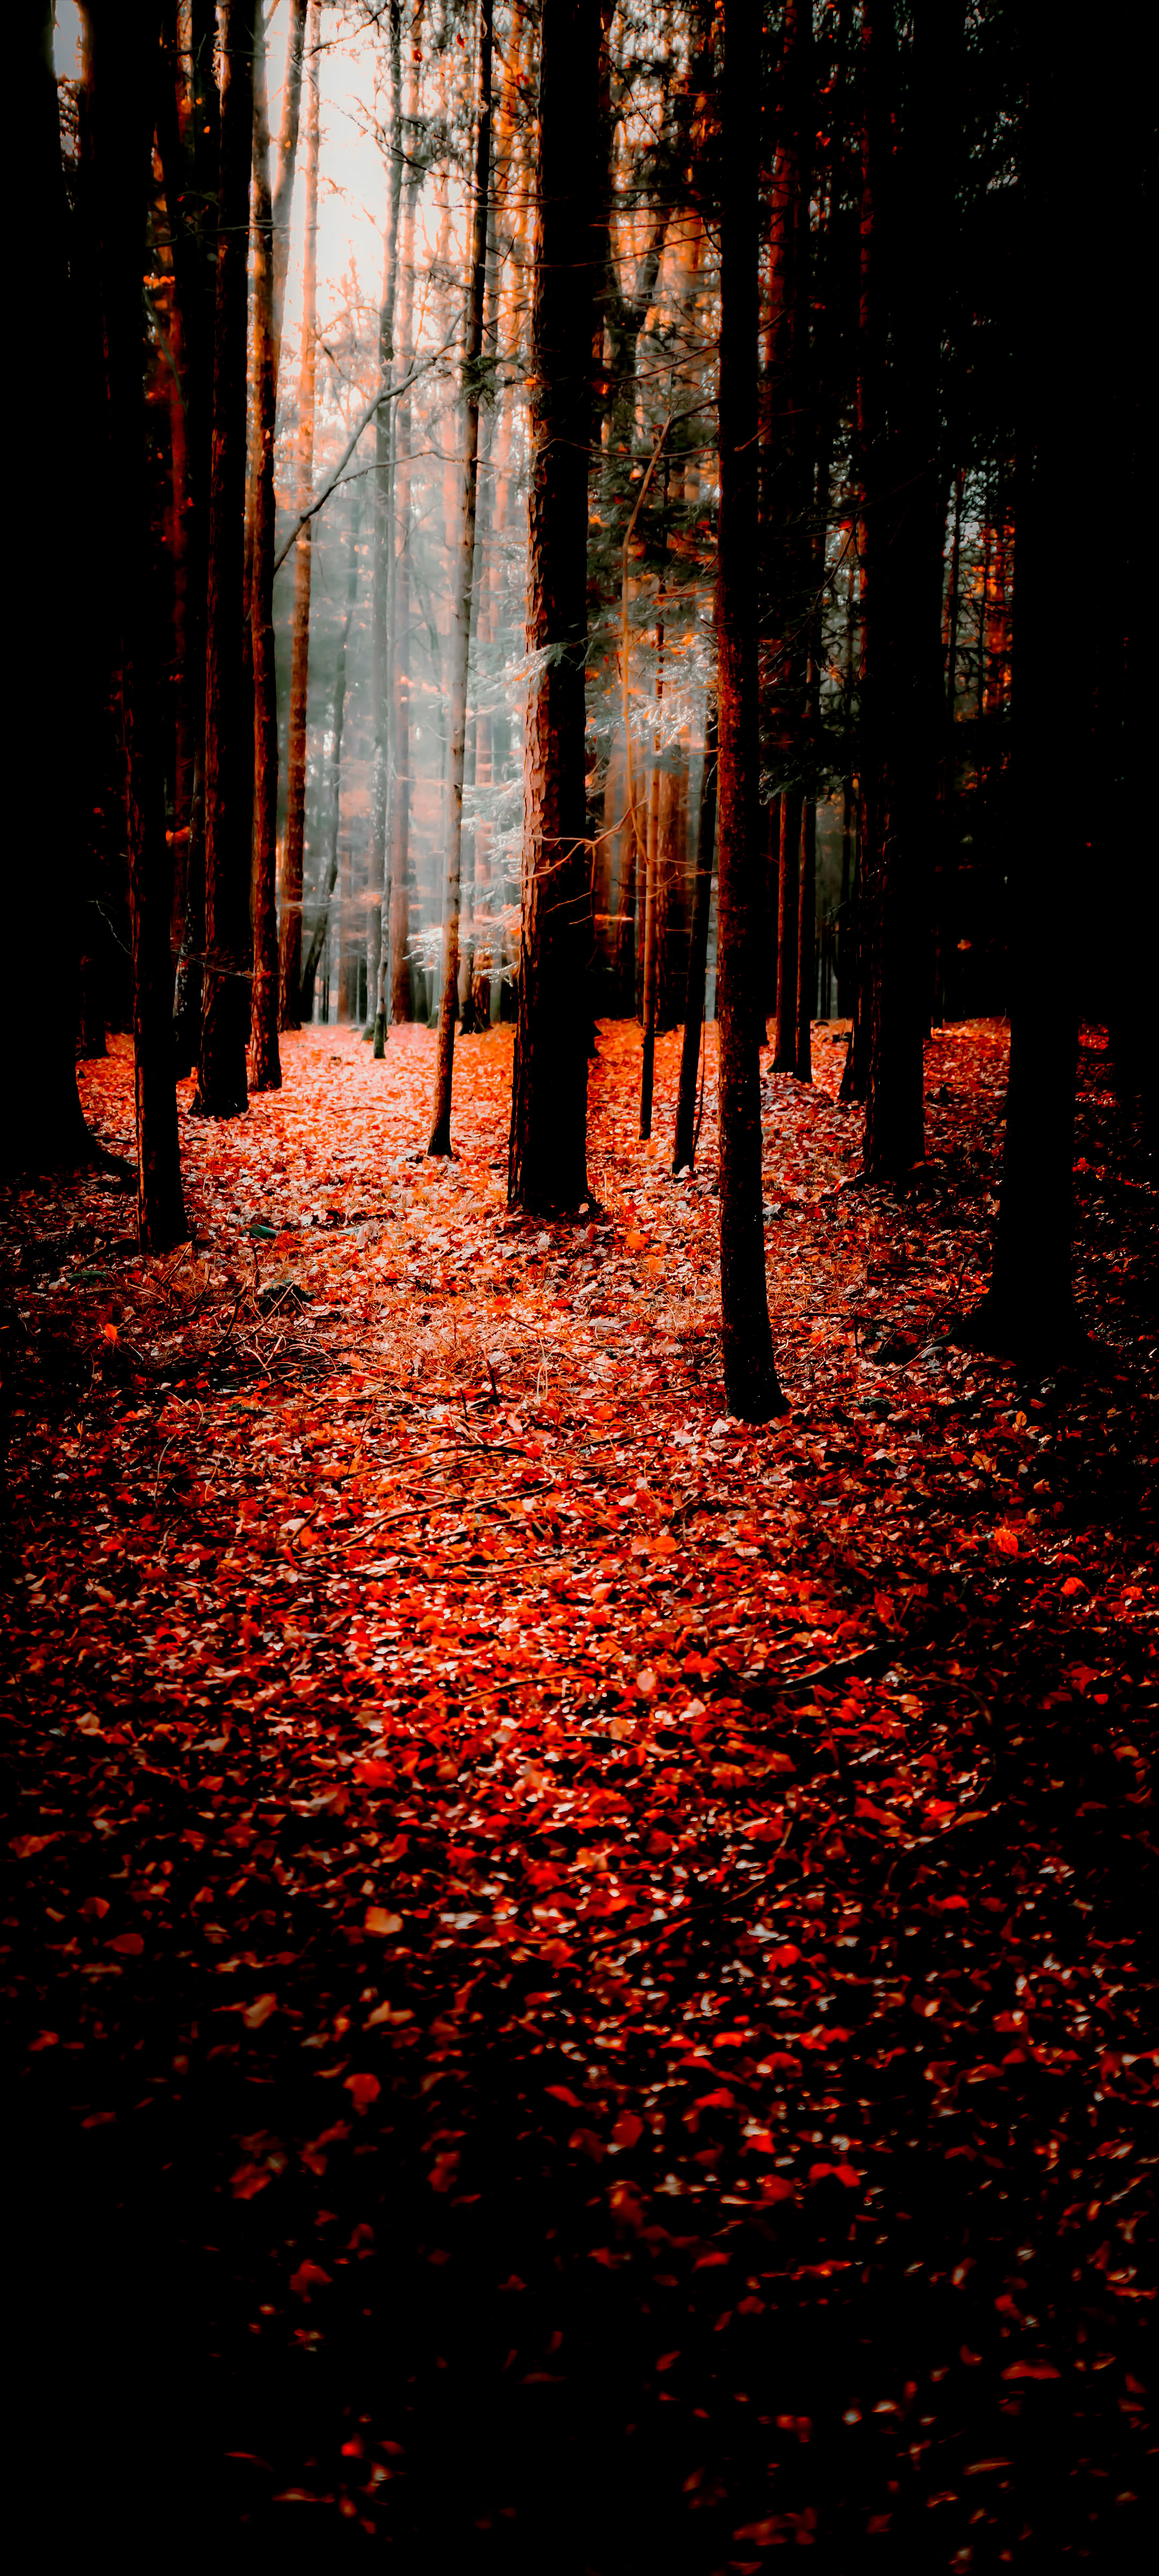 Autumn Forest Mist IPhone Wallpaper  IPhone Wallpapers  iPhone Wallpapers